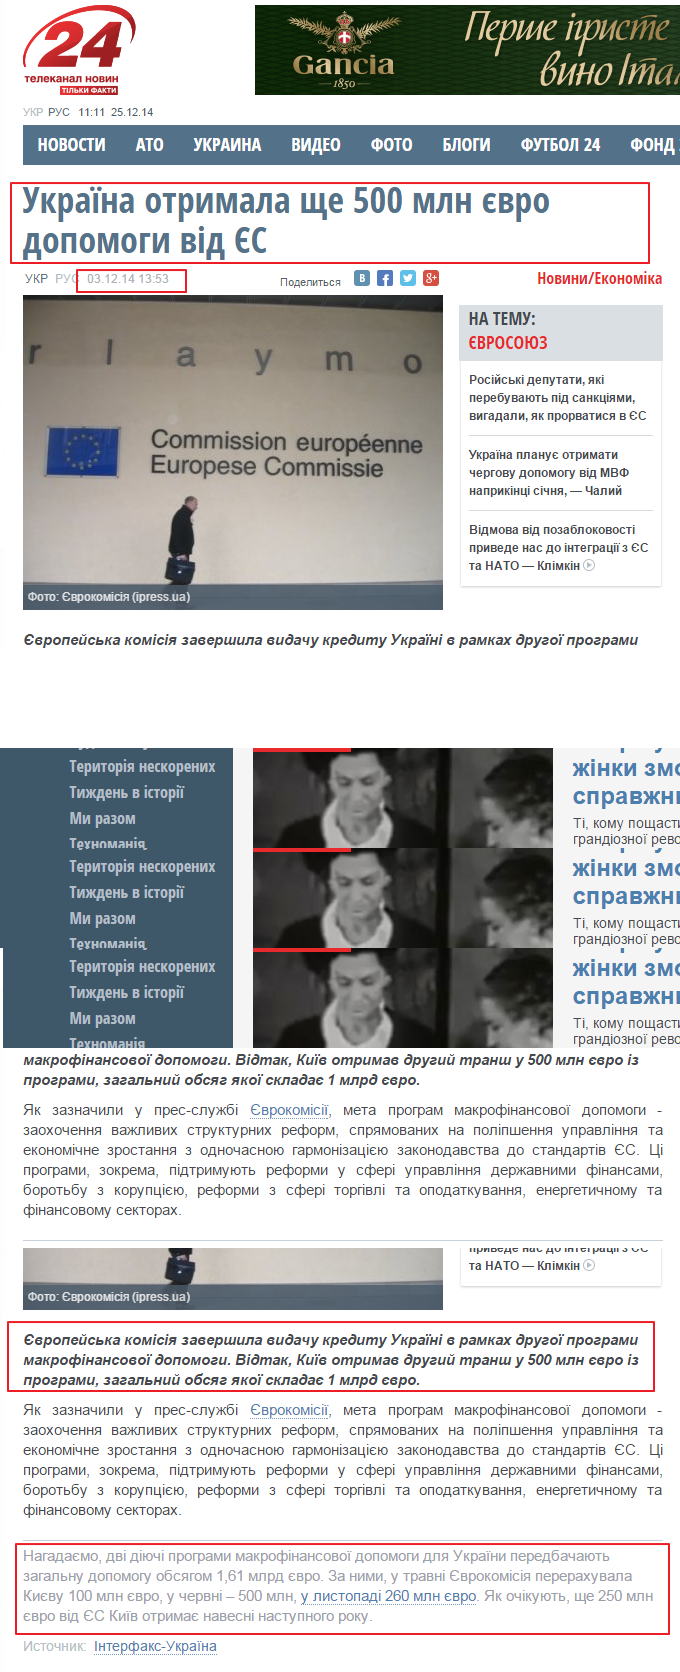 http://24tv.ua/home/showSingleNews.do?ukrayina_otrimala_shhe_500_mln_yevro_dopomogi_vid_yes&objectId=516497&lang=ru